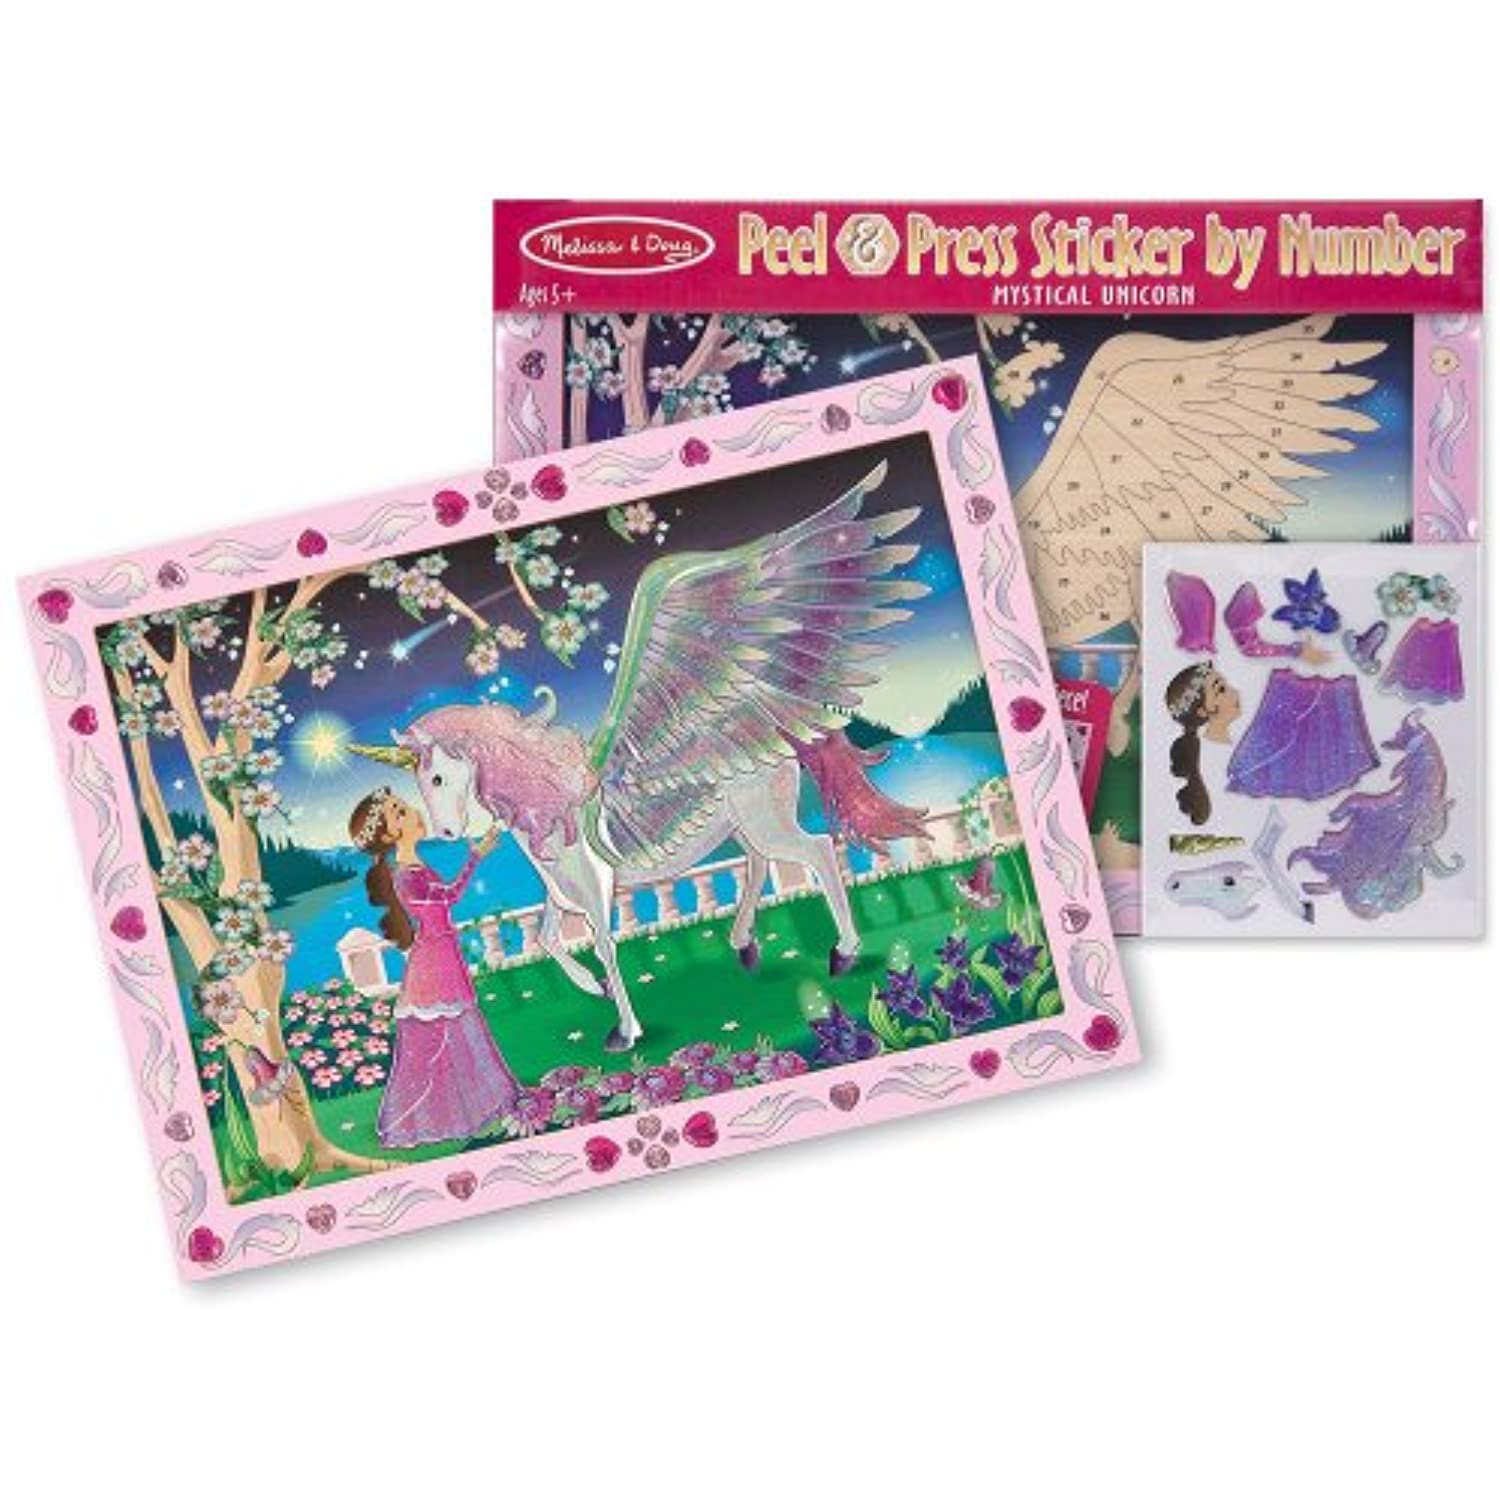 Melissa & Doug Mystical Unicorn: Peel & Press Sticker by Number Series + Free Scratch Art Mini-Pad Bundle [42963]